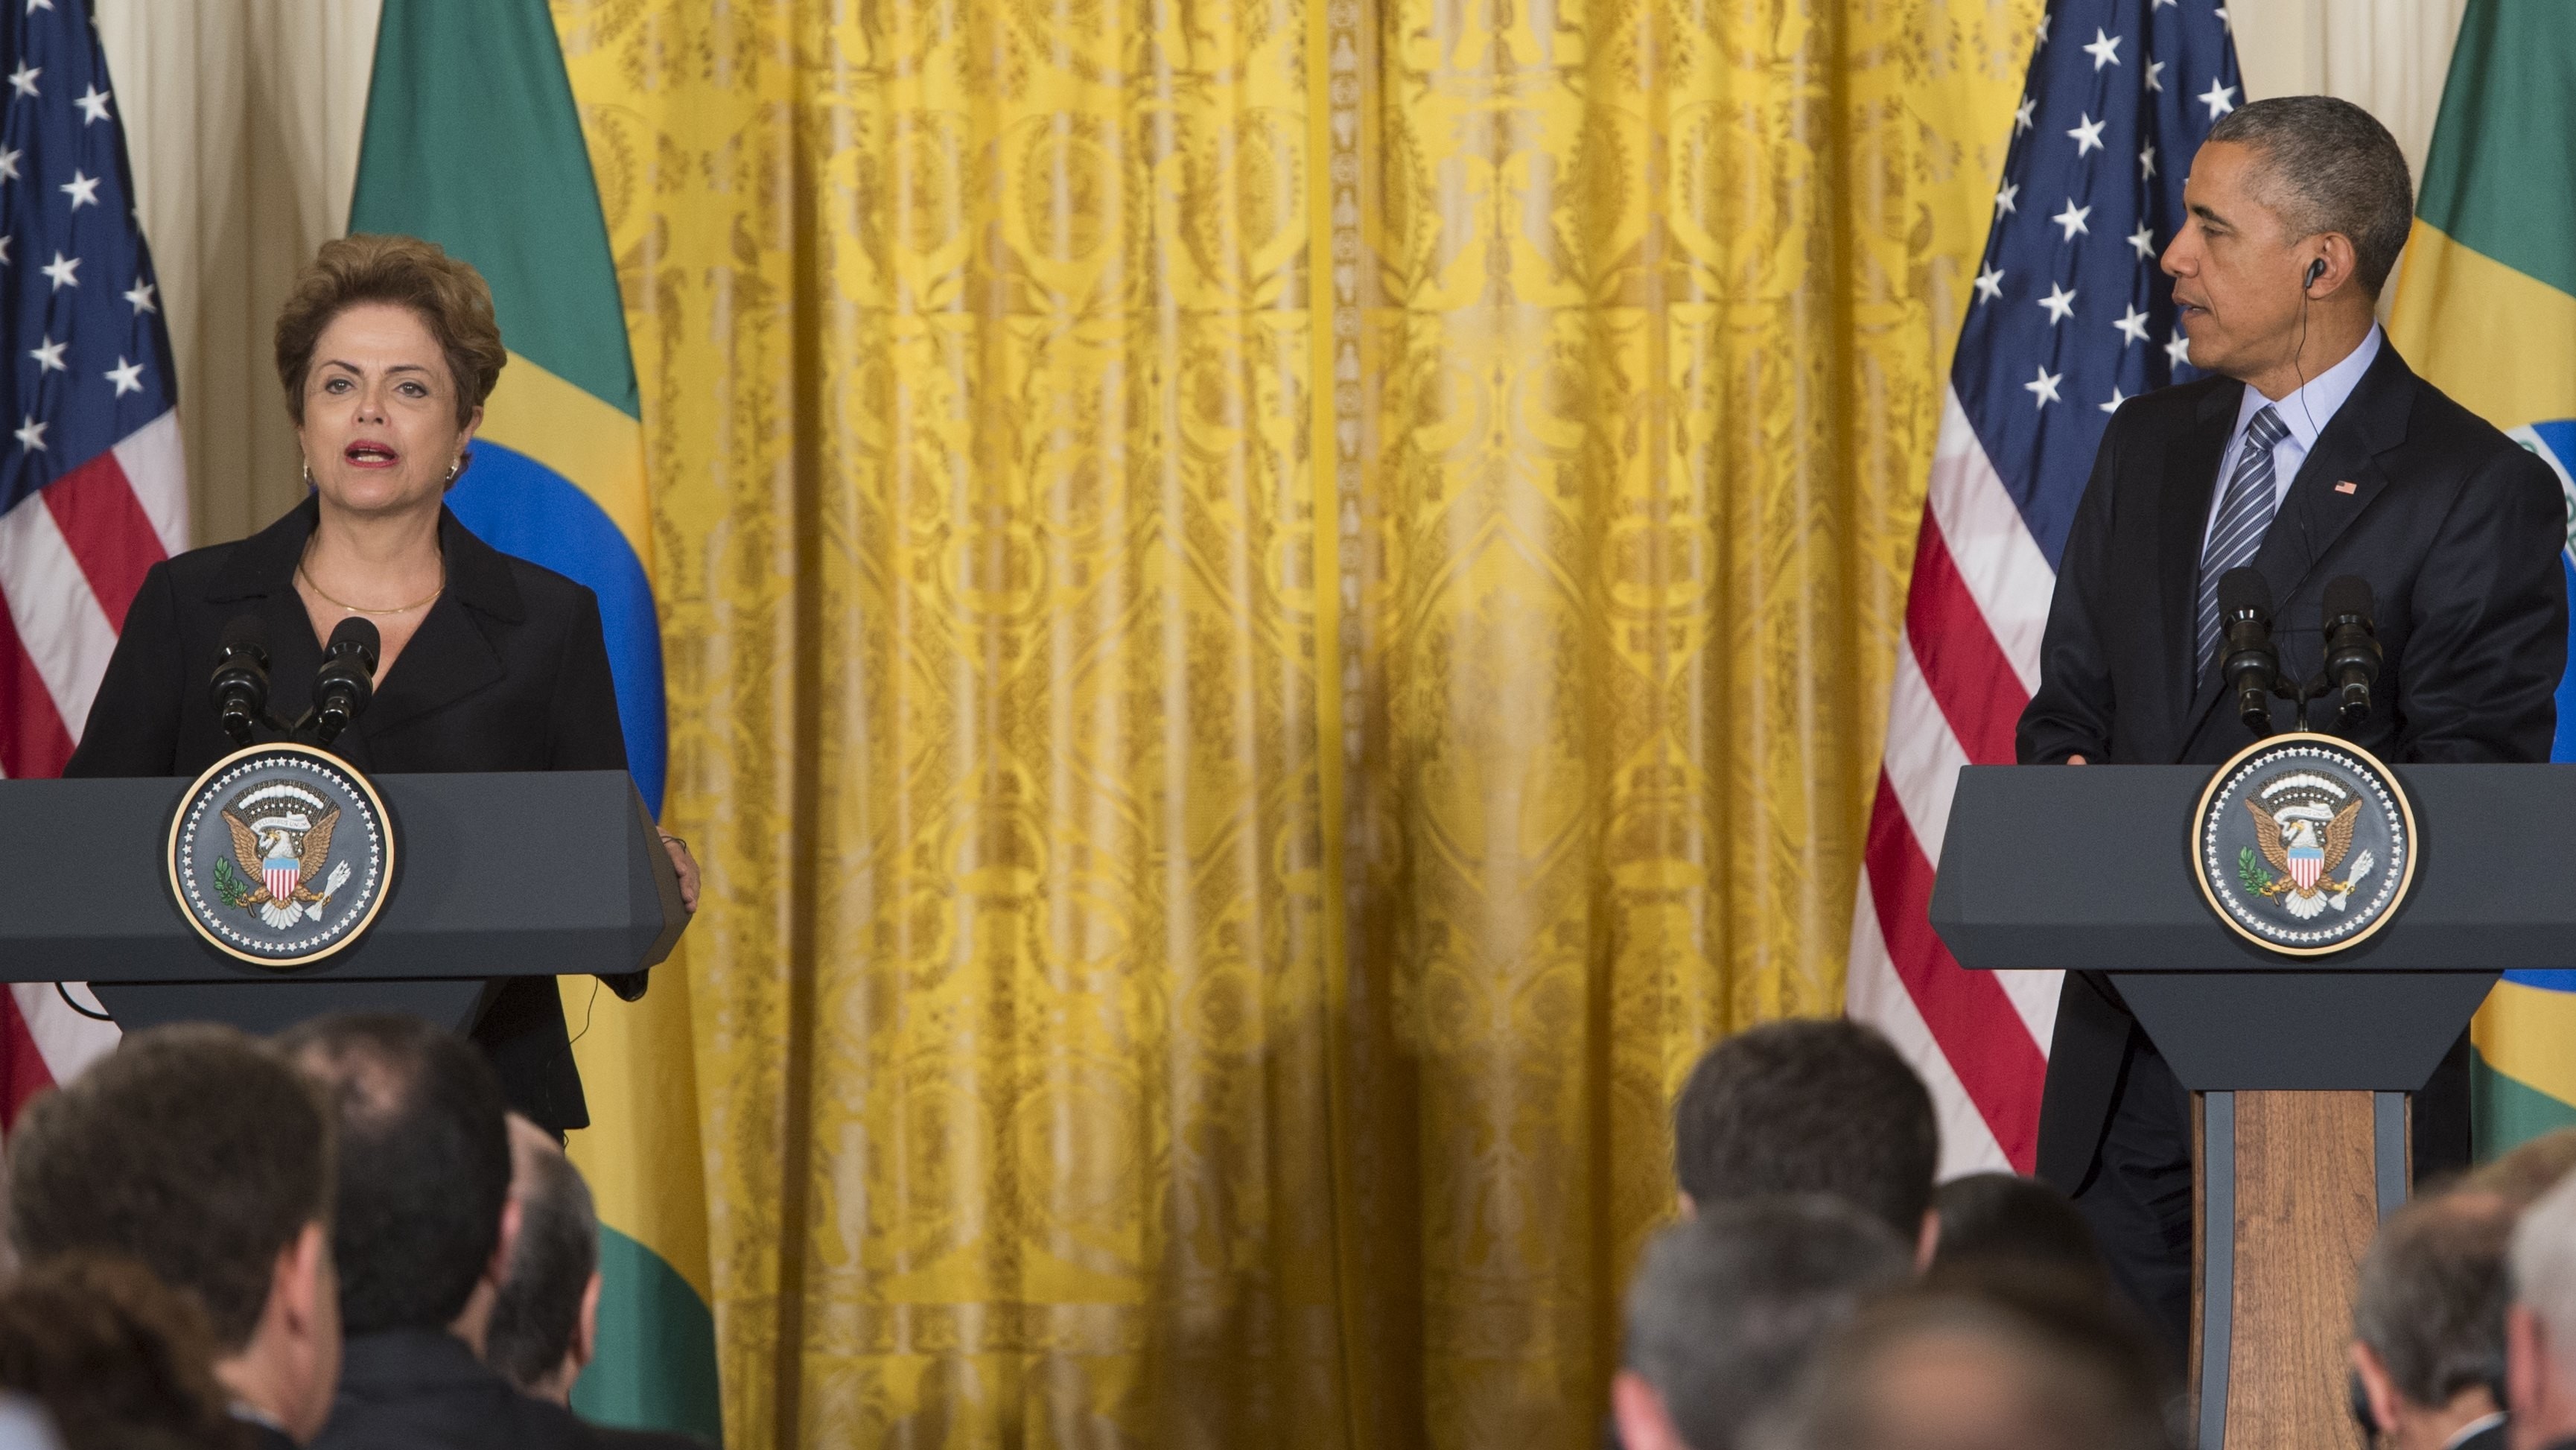  Análisis internacional: Barack Obama y Dilma Rousseff dejan atrás roces diplomáticos